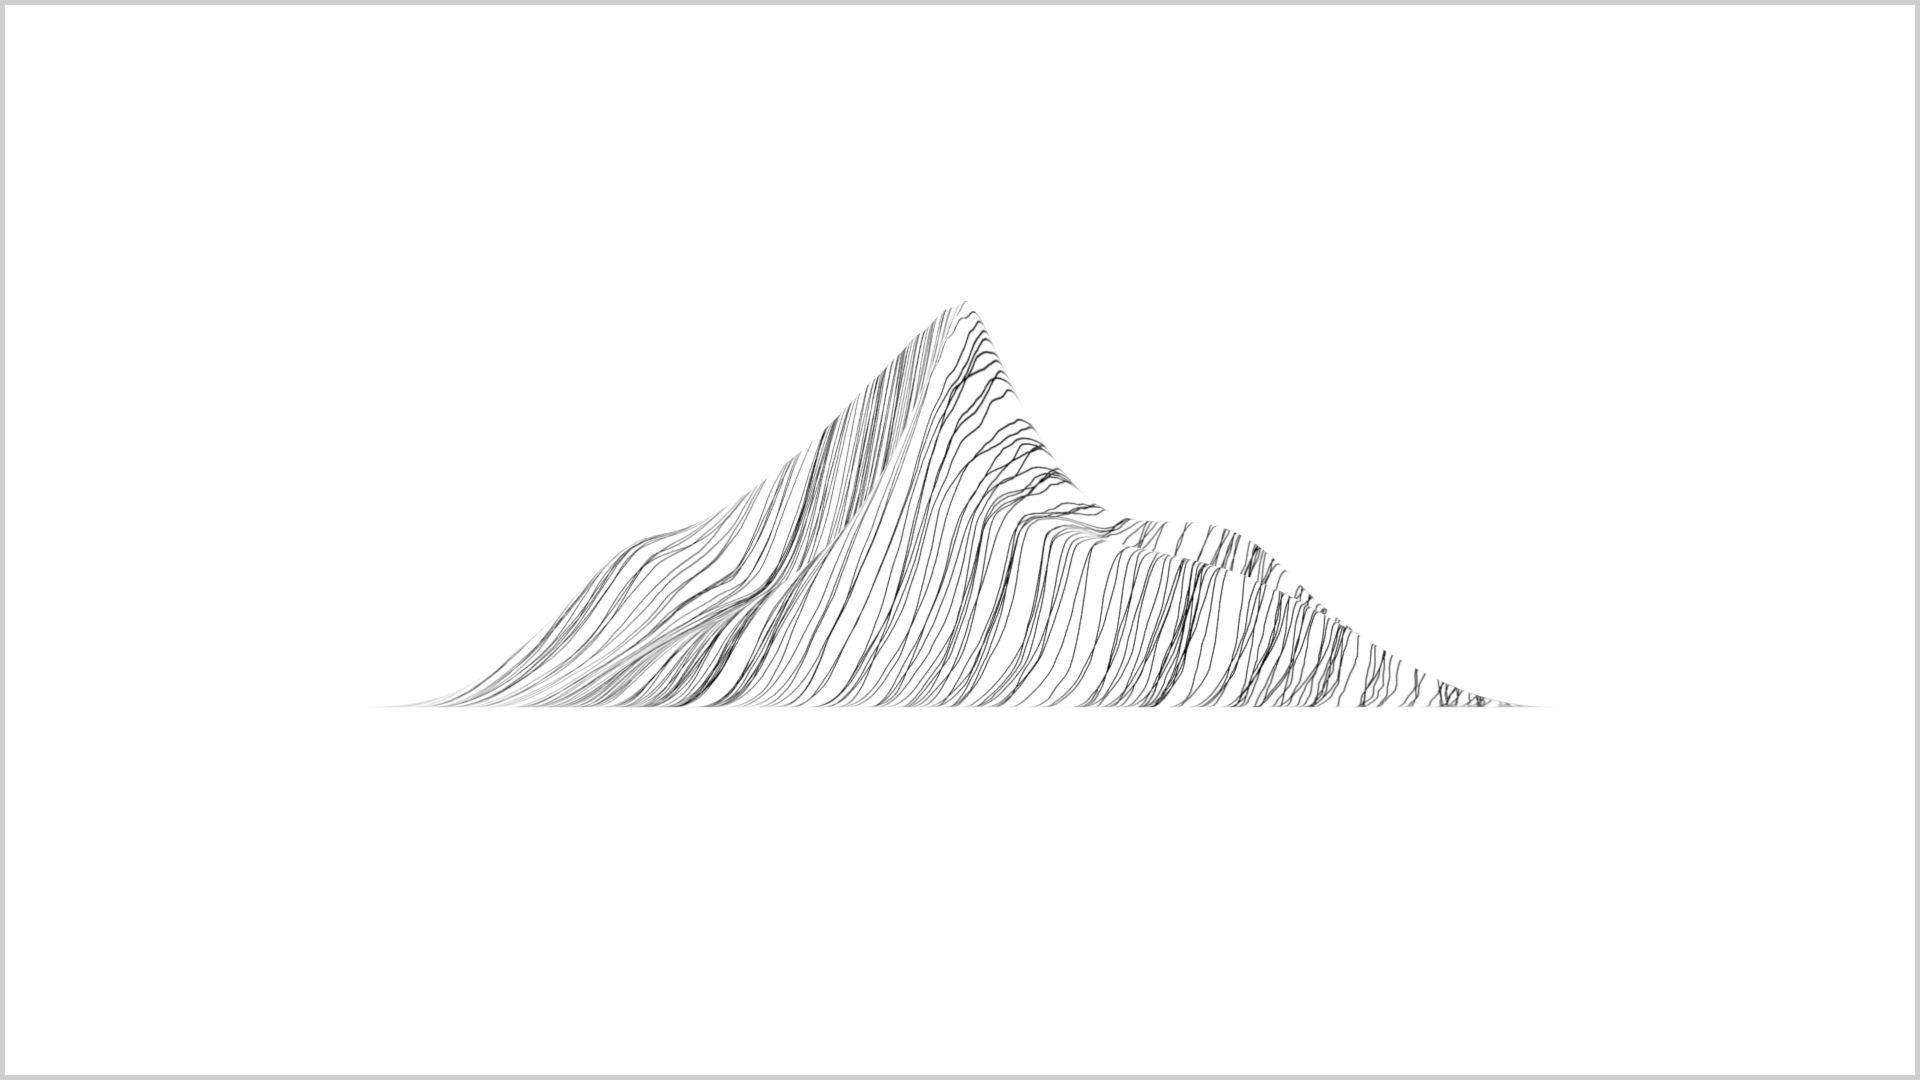 Topographic wallpaper engine. Горы Графика. Горы рисунок. Векторные горы. Горы линиями.